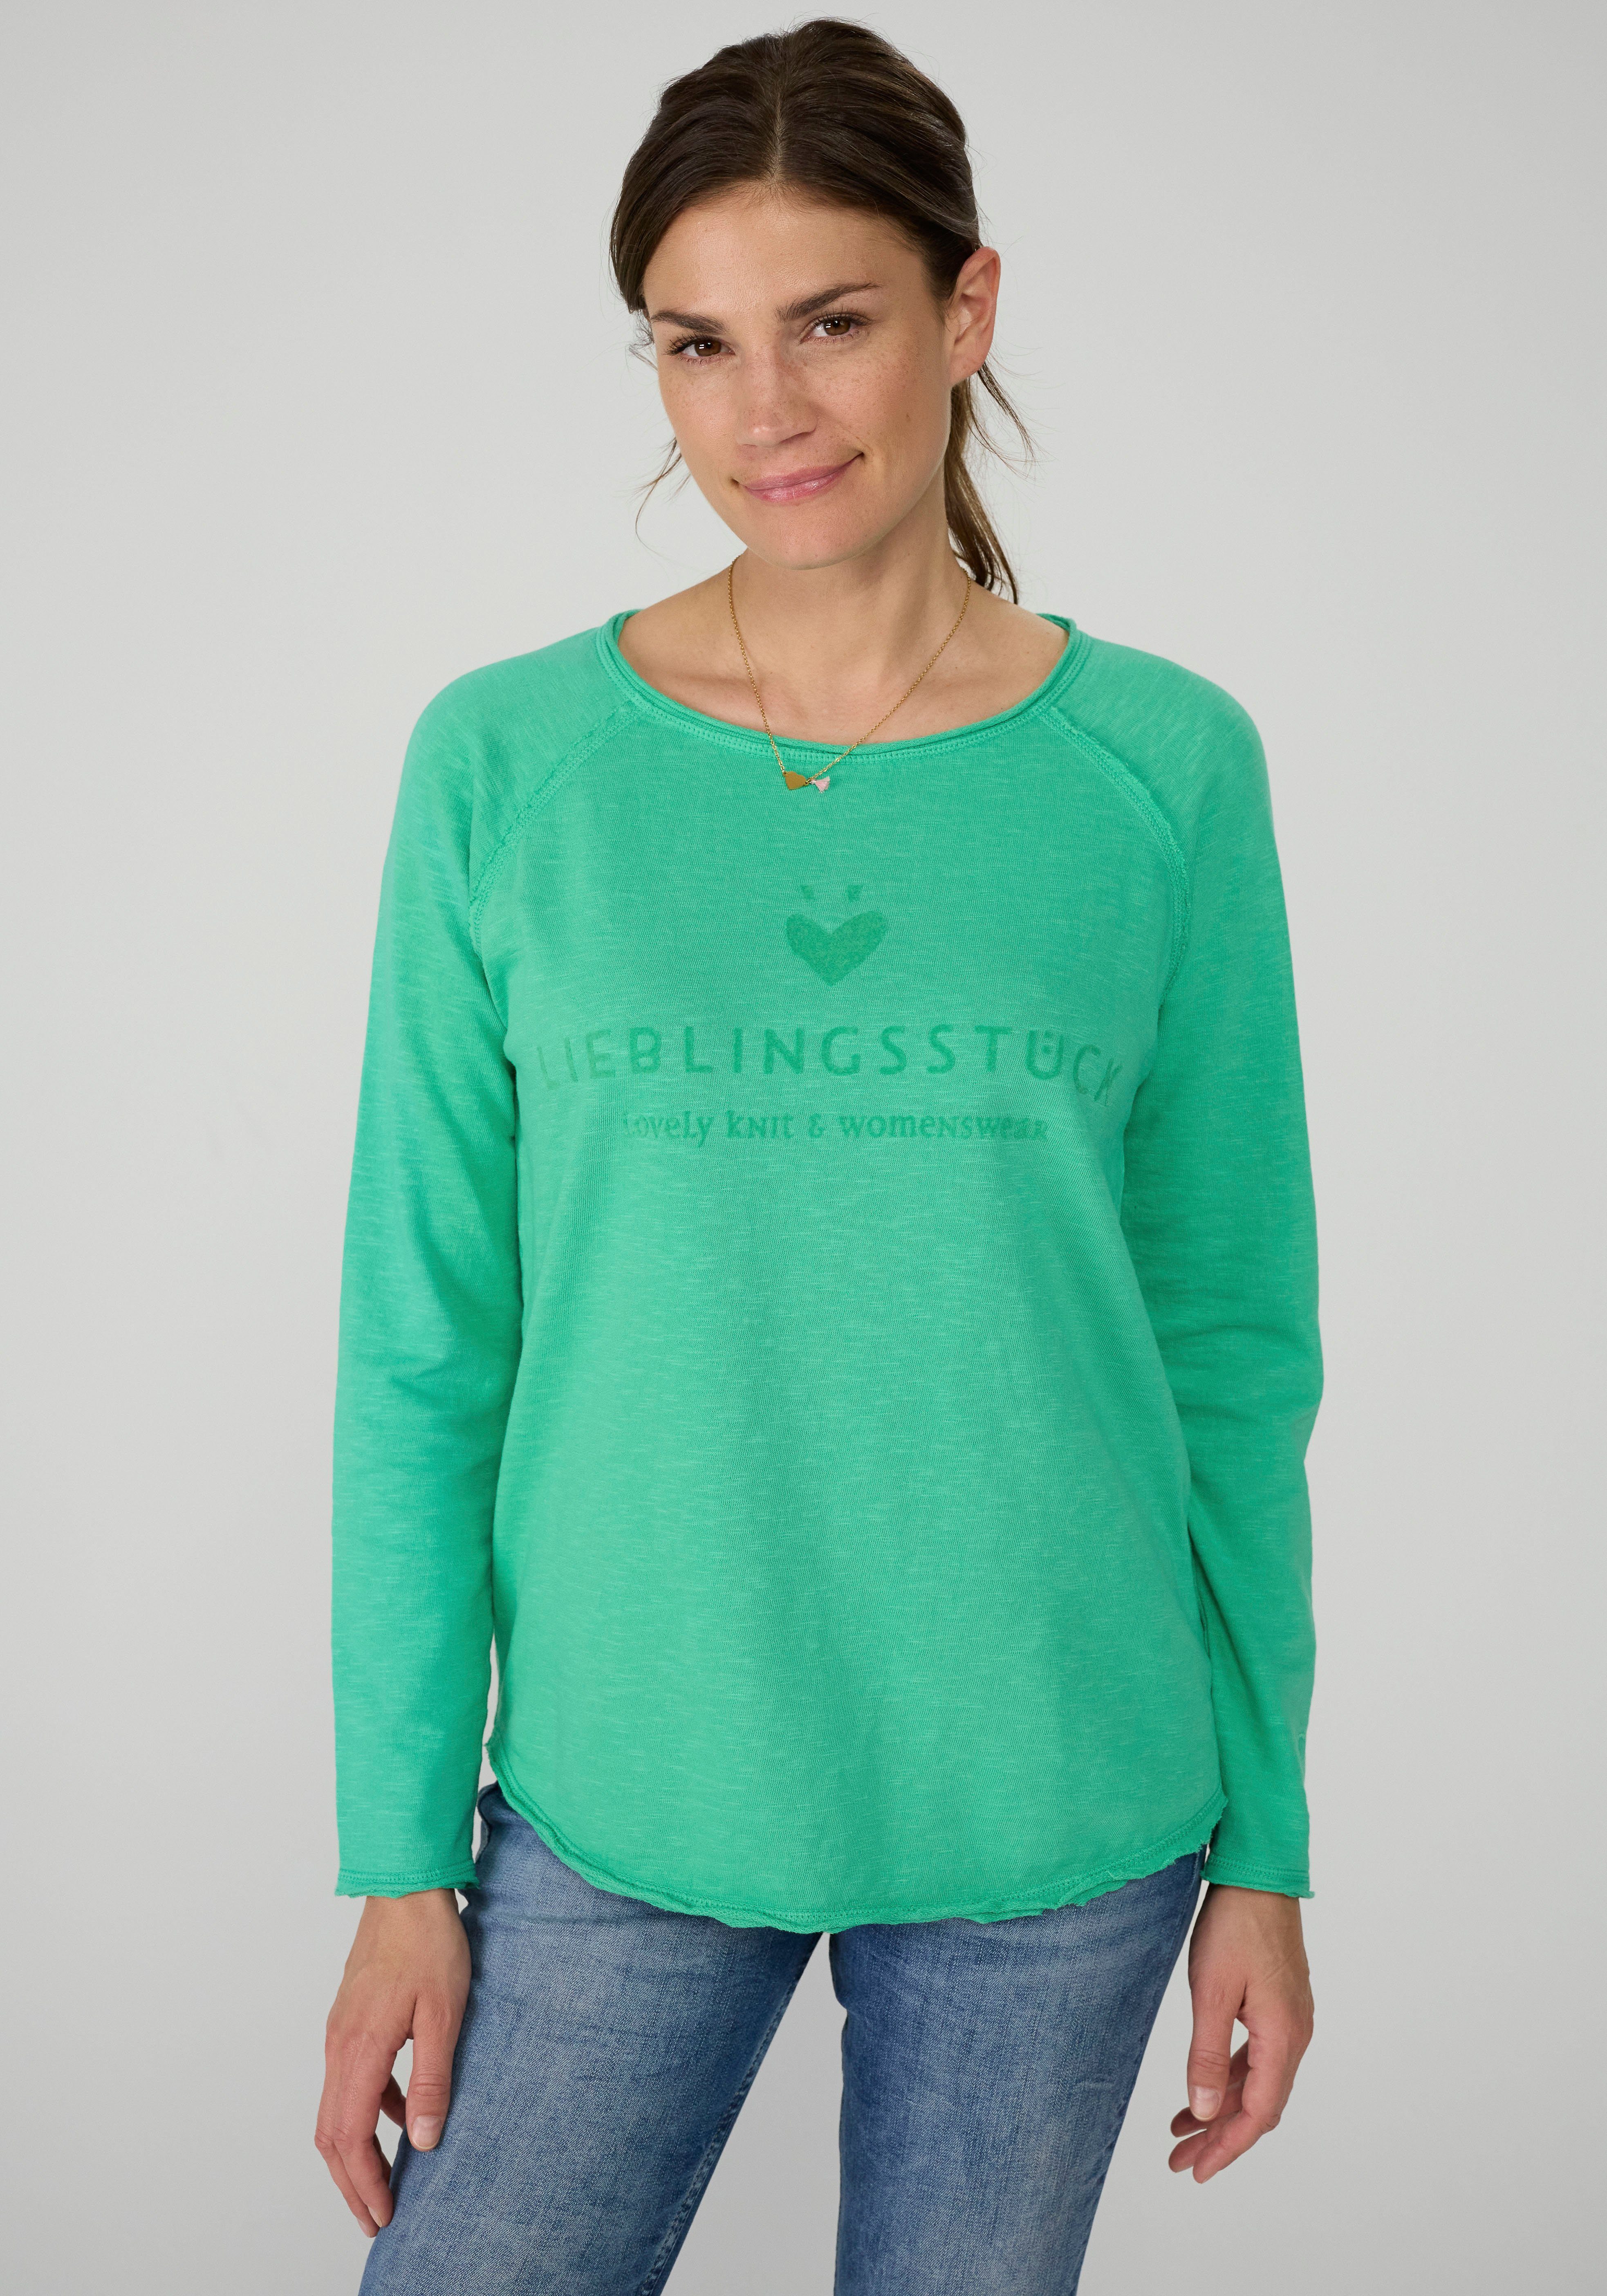 Sweatshirt Logoprint grün CathrinaEP Lieblingsstück Sweatshirt mit